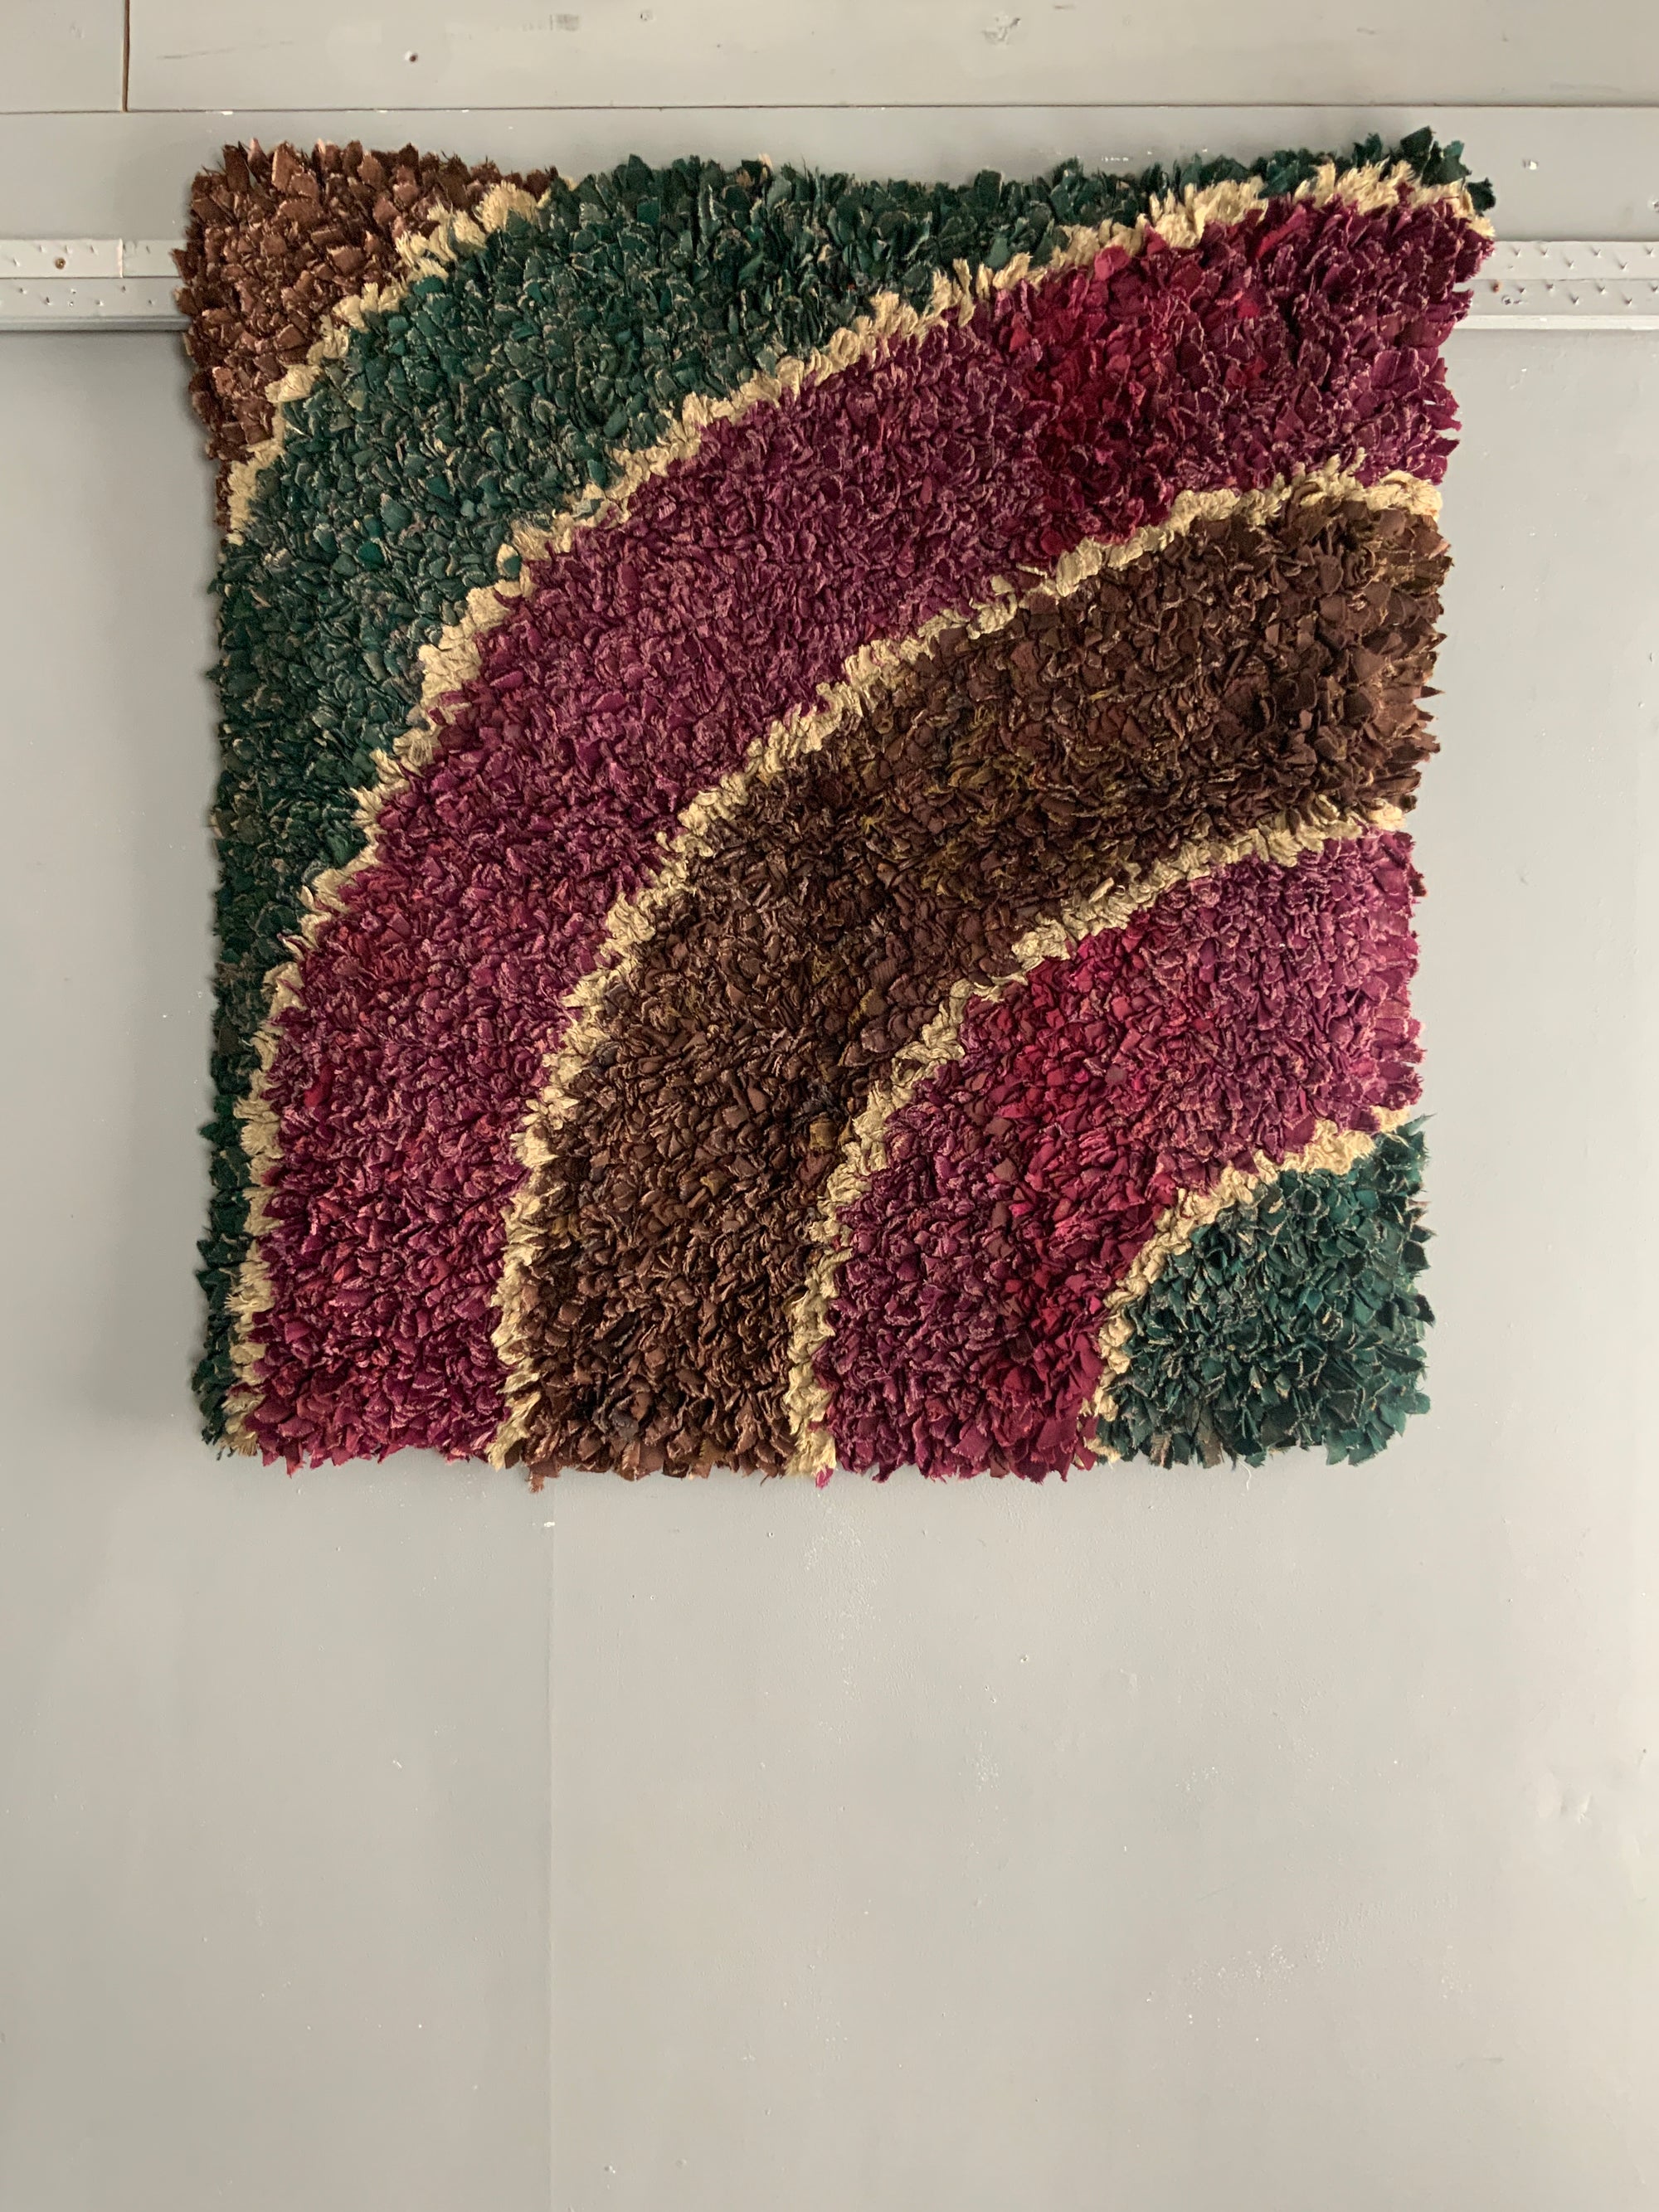 North country proddy rug (89 x 86cm)